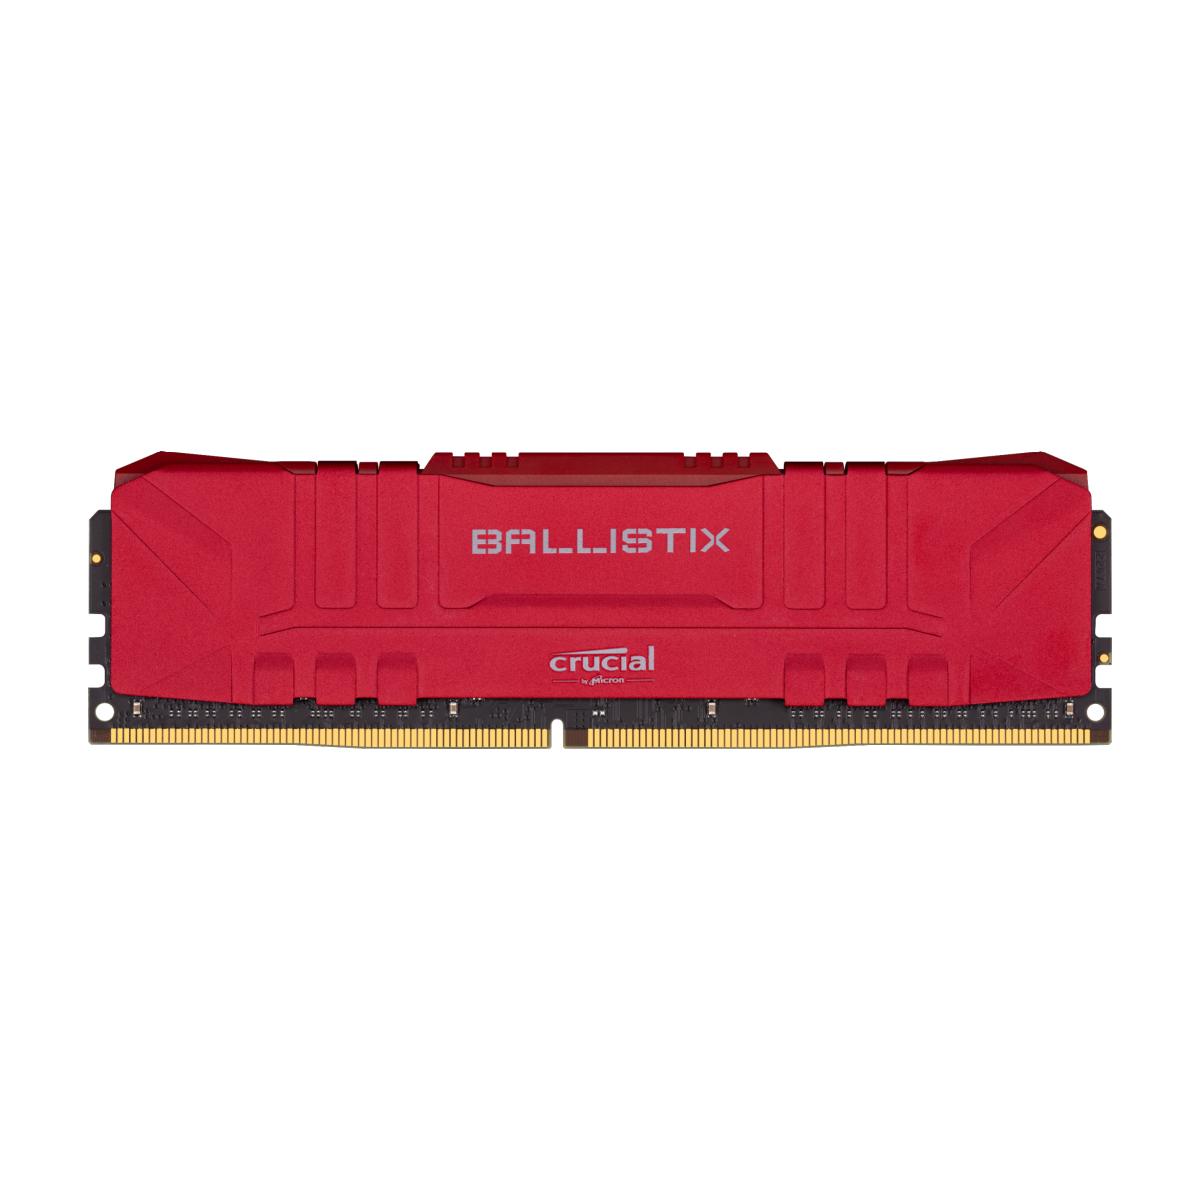 MEMORIA DIMM DDR4 CRUCIAL BALLISTIX (BL8G30C15U4R)8GB 3000MHZ, RED HEATSINK, CL15 - BL8G30C15U4R